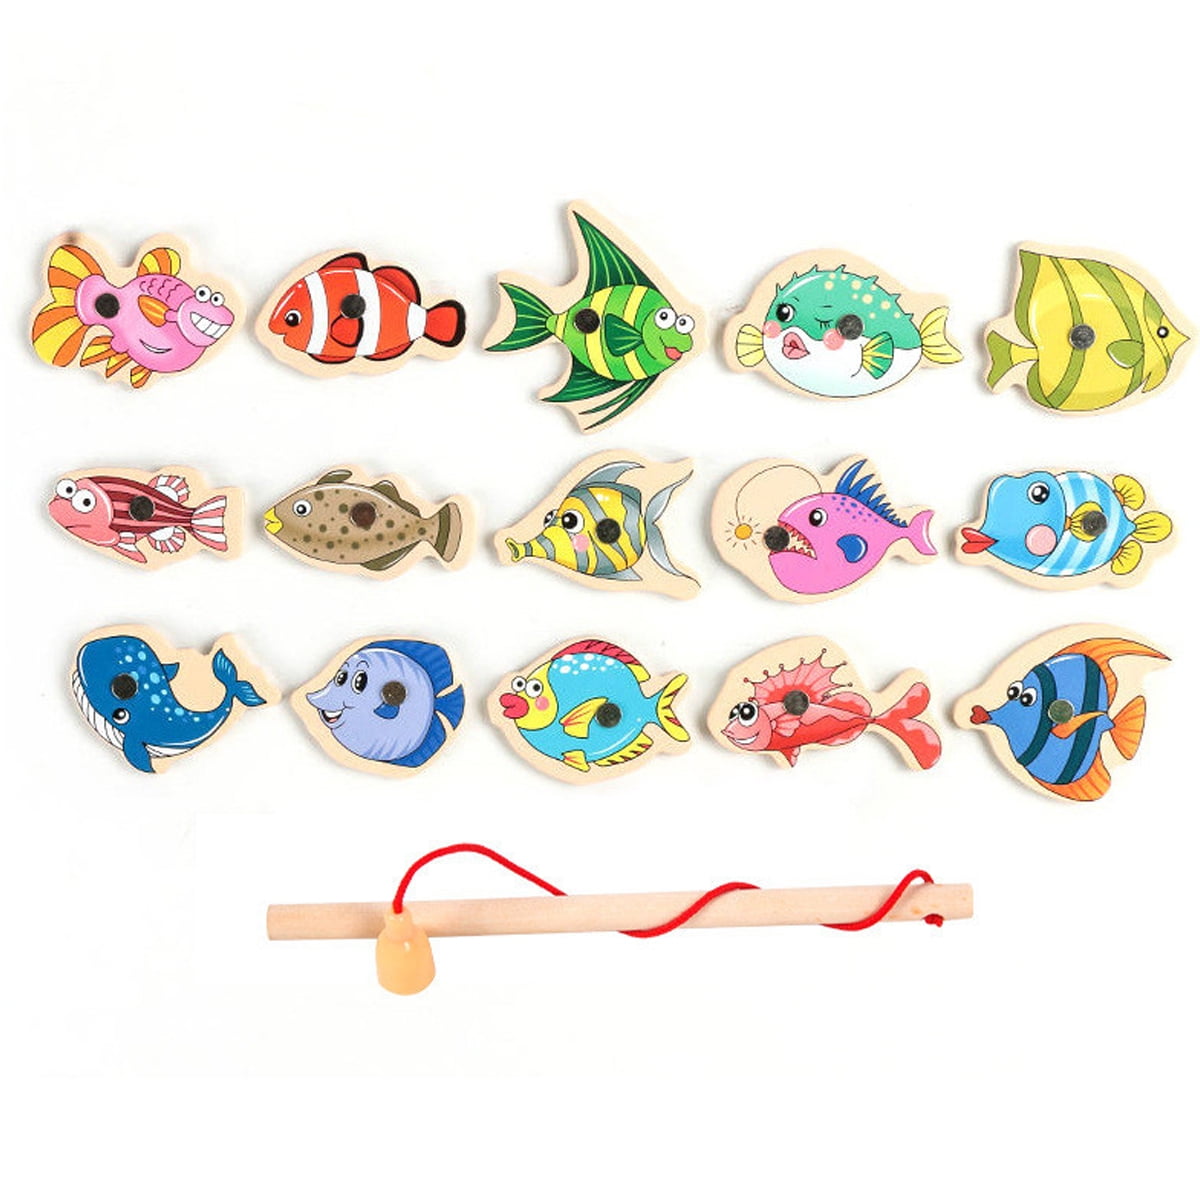 Kids Fishing Bath Toys Game - 7Pcs Magnetic Floating Fish & Fishing Pole  Gift